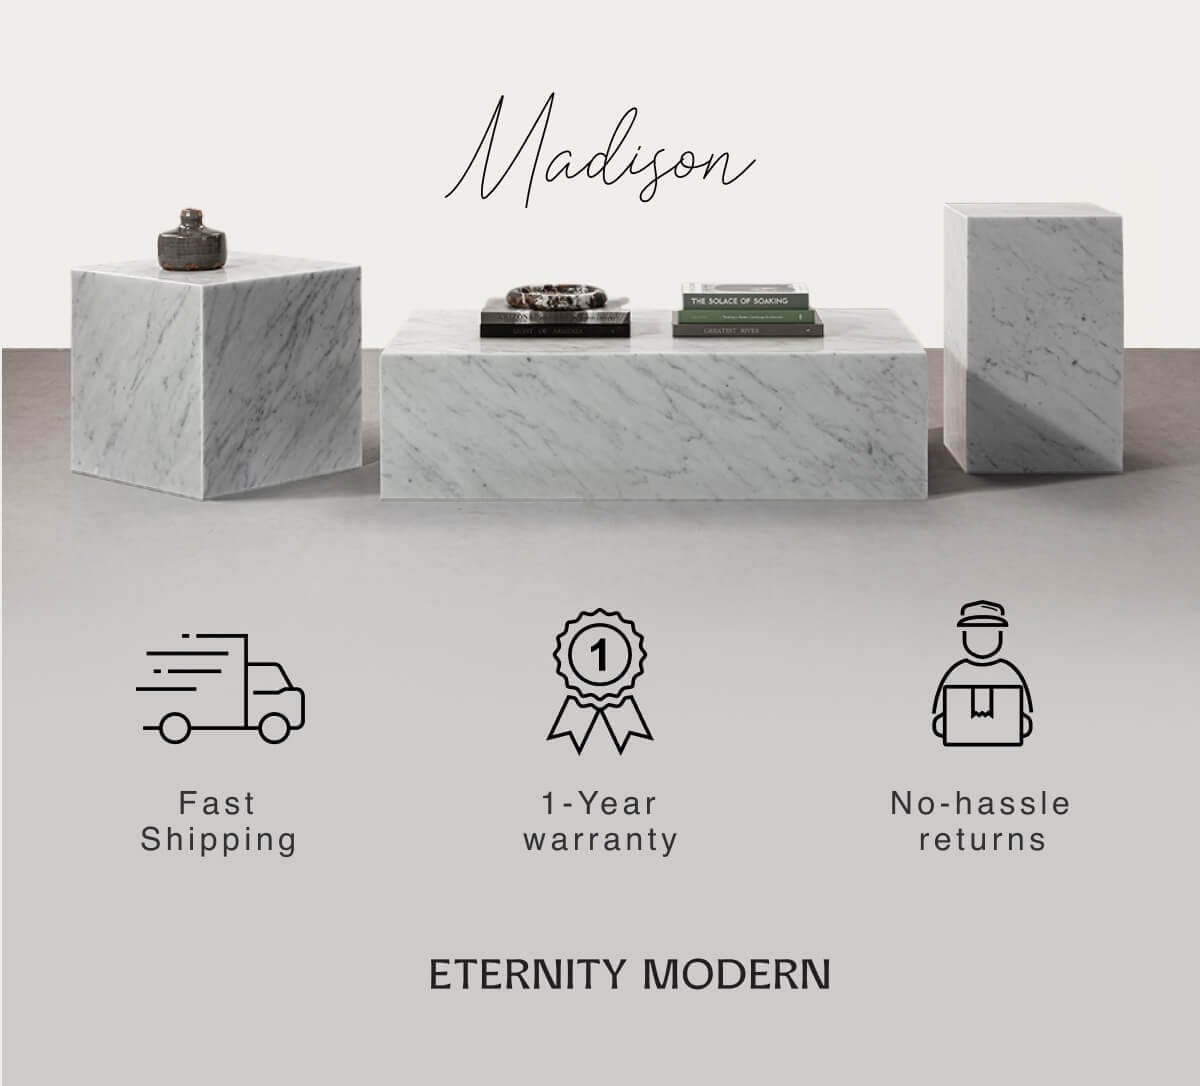 Madison - Fast Shipping - 1 Year Warranty - No hassle returns - ETERNITY MODERN